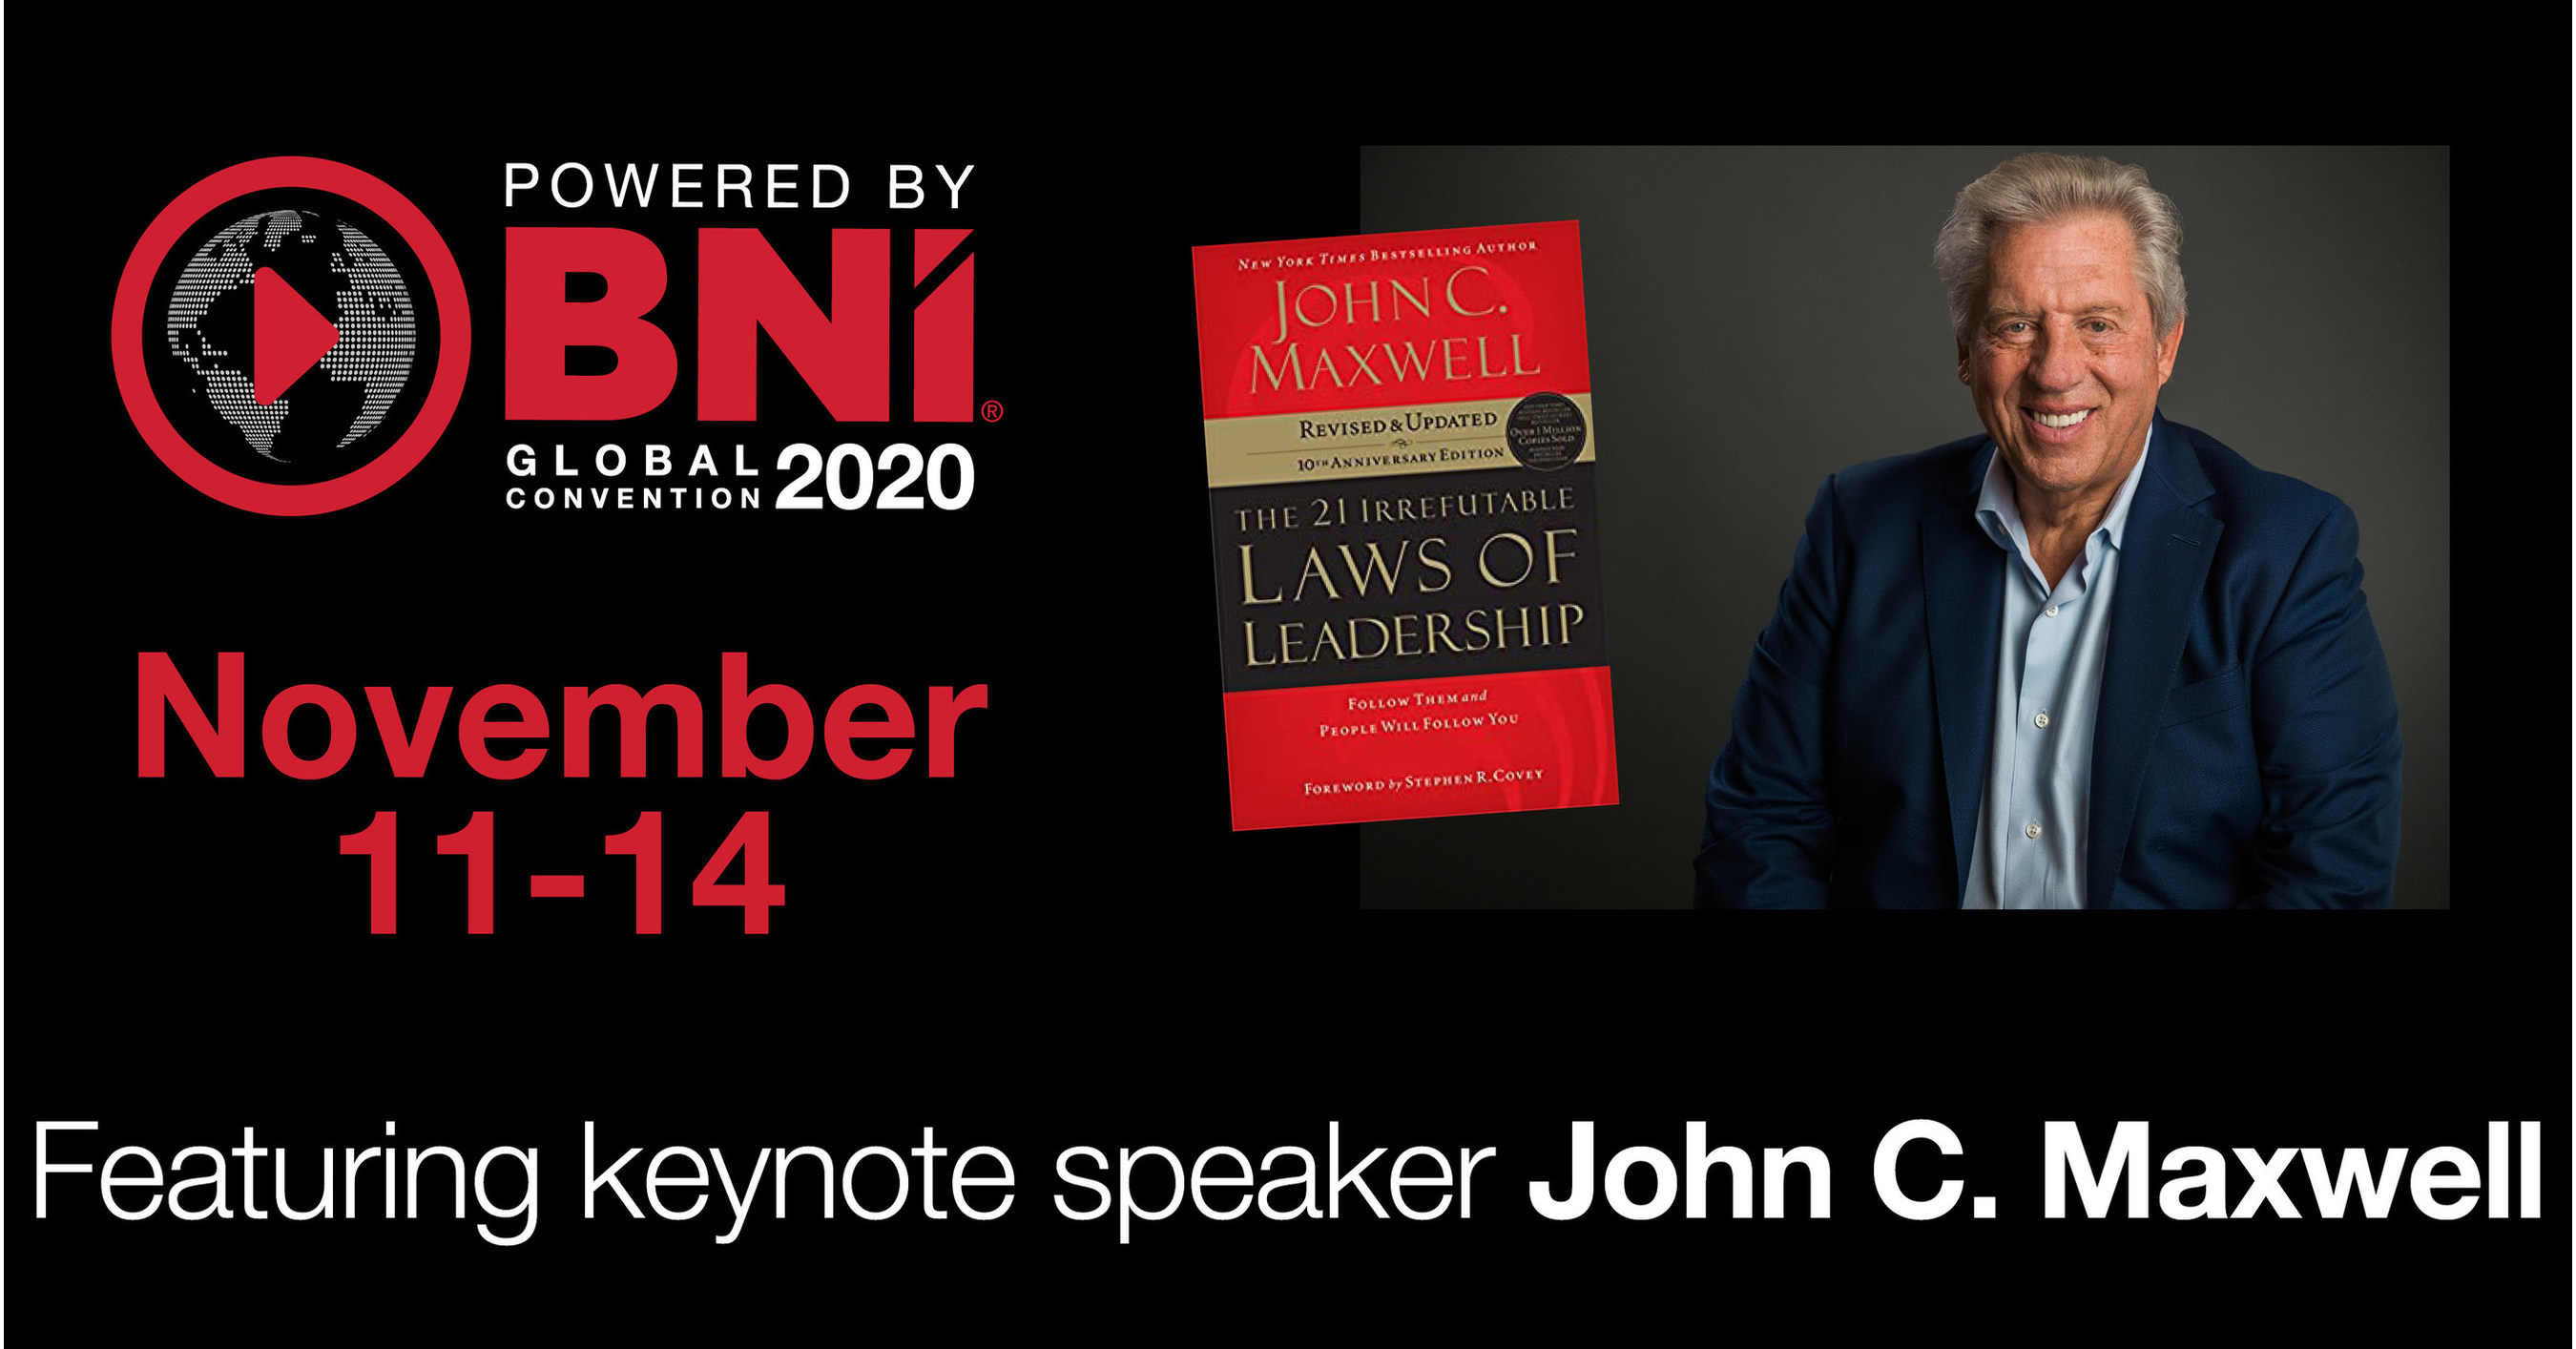 John C. Maxwell to headline BNI's 2020 Global Convention